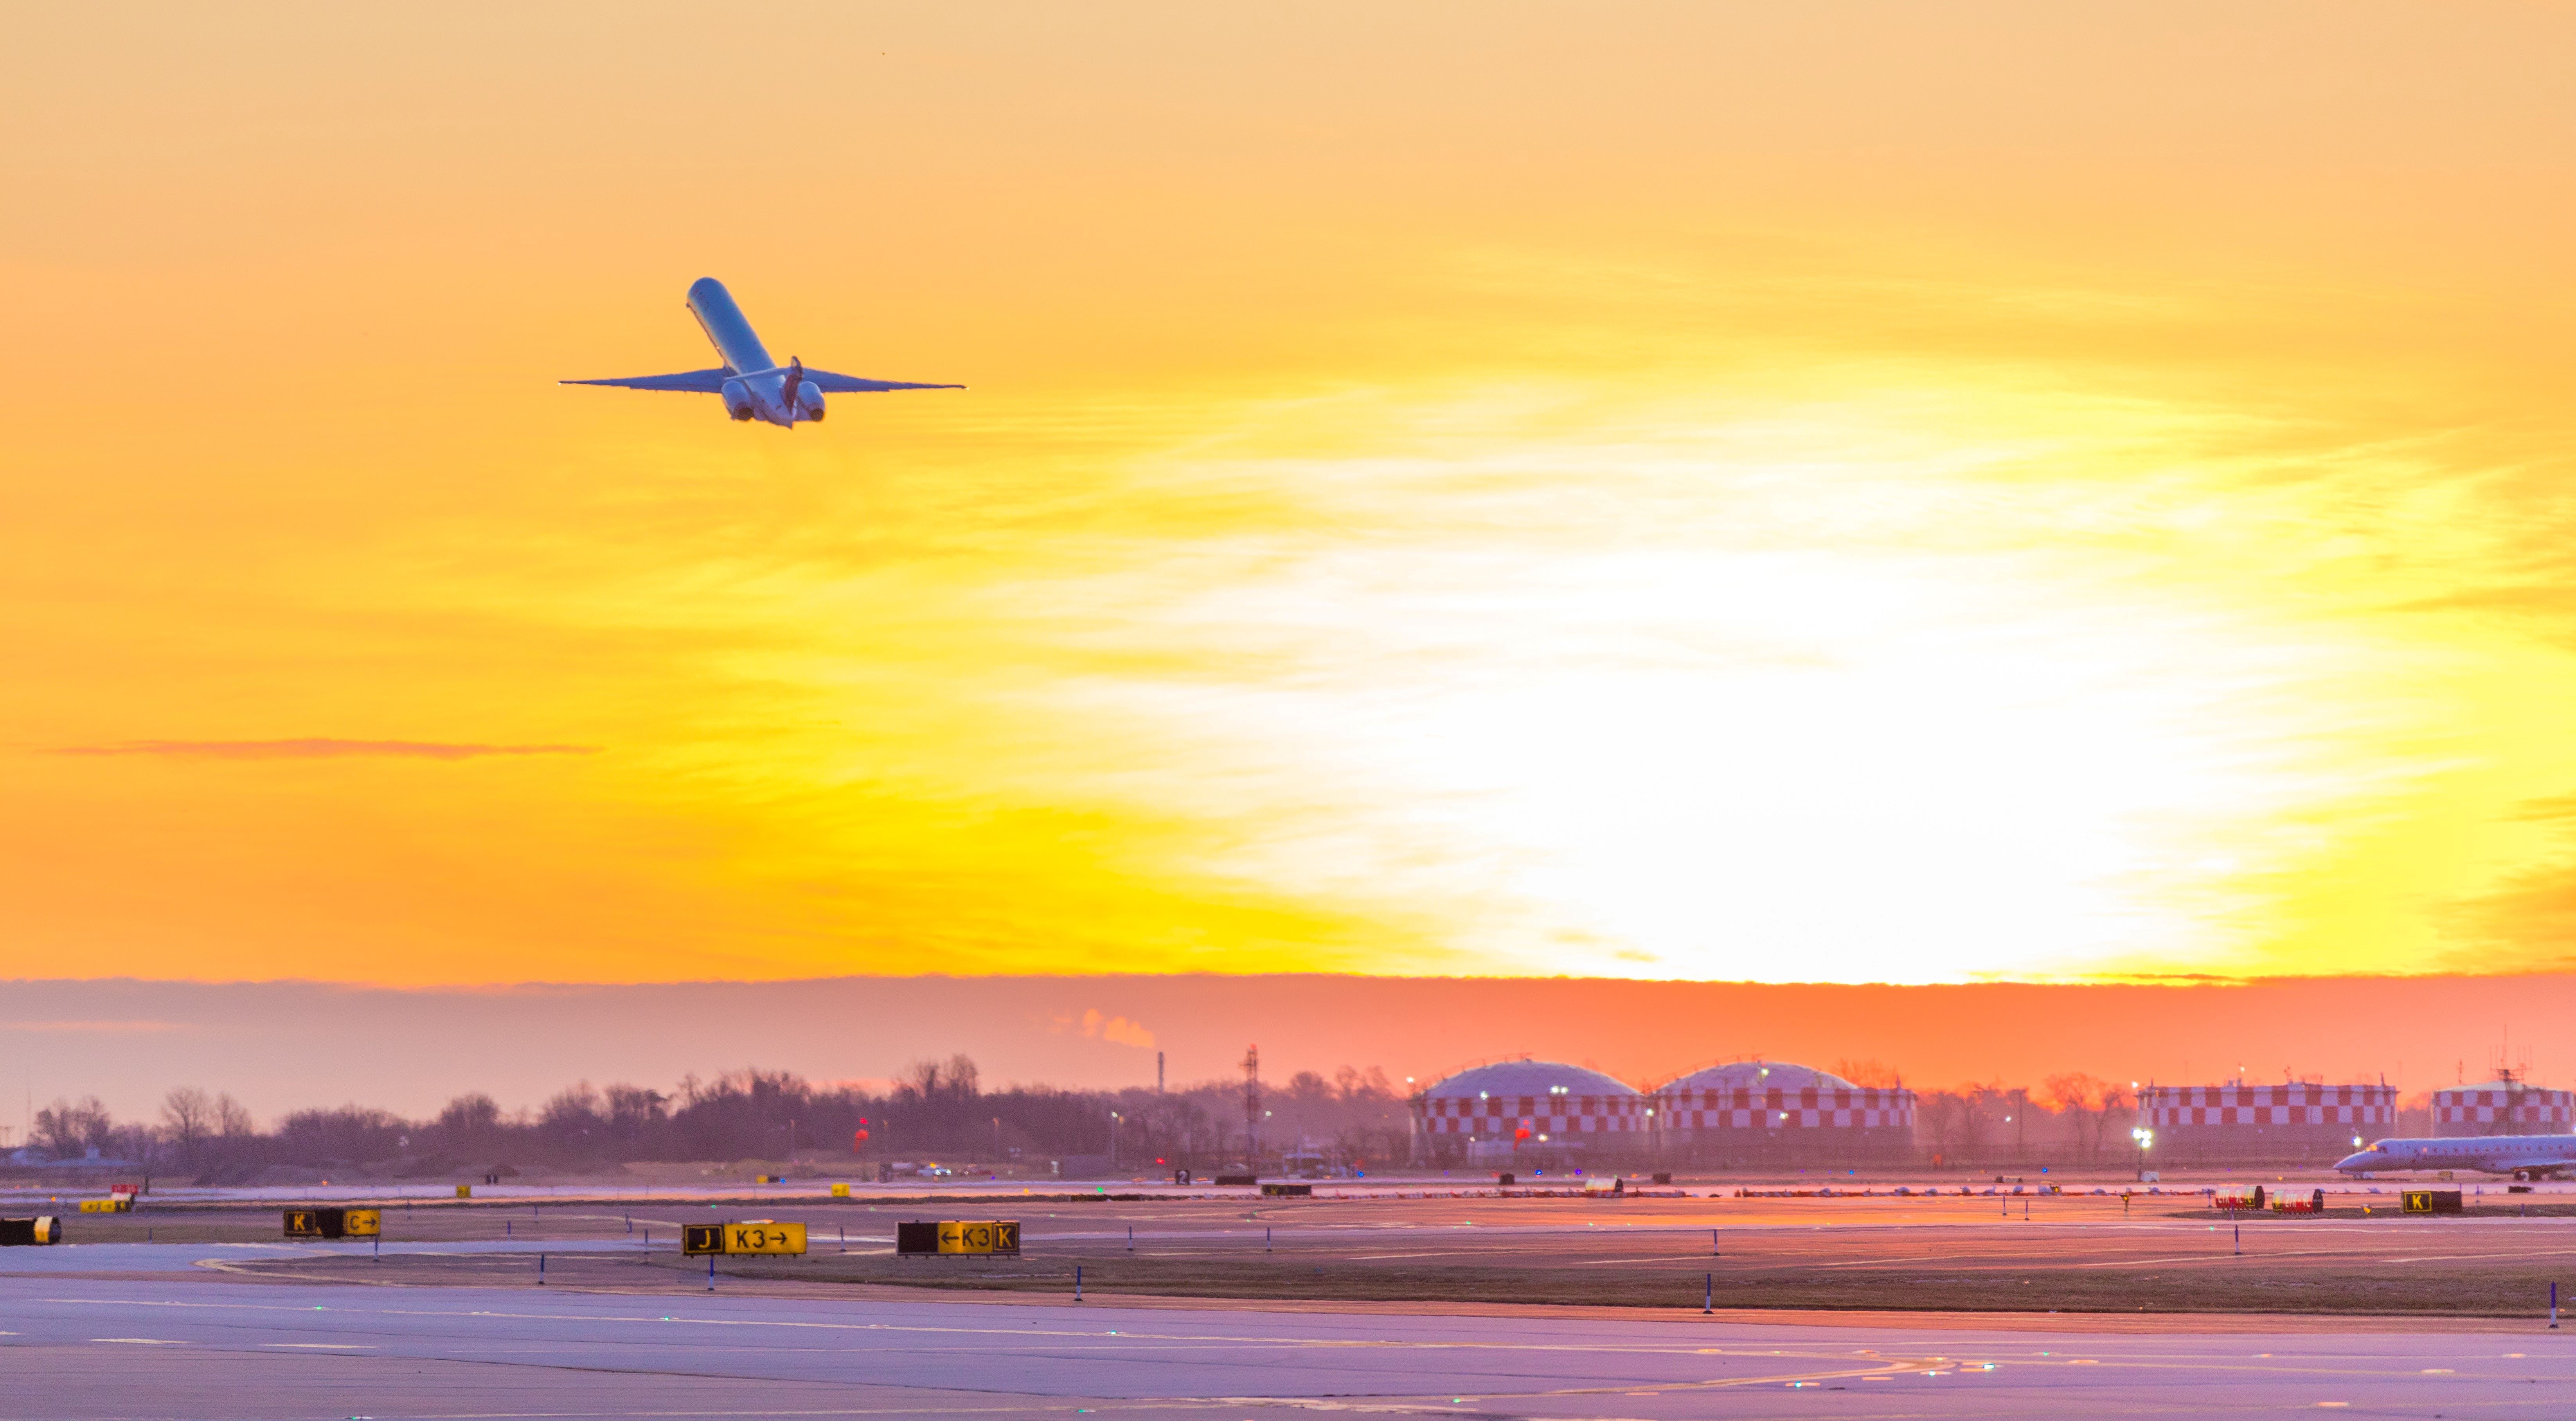 Sunrise and plane